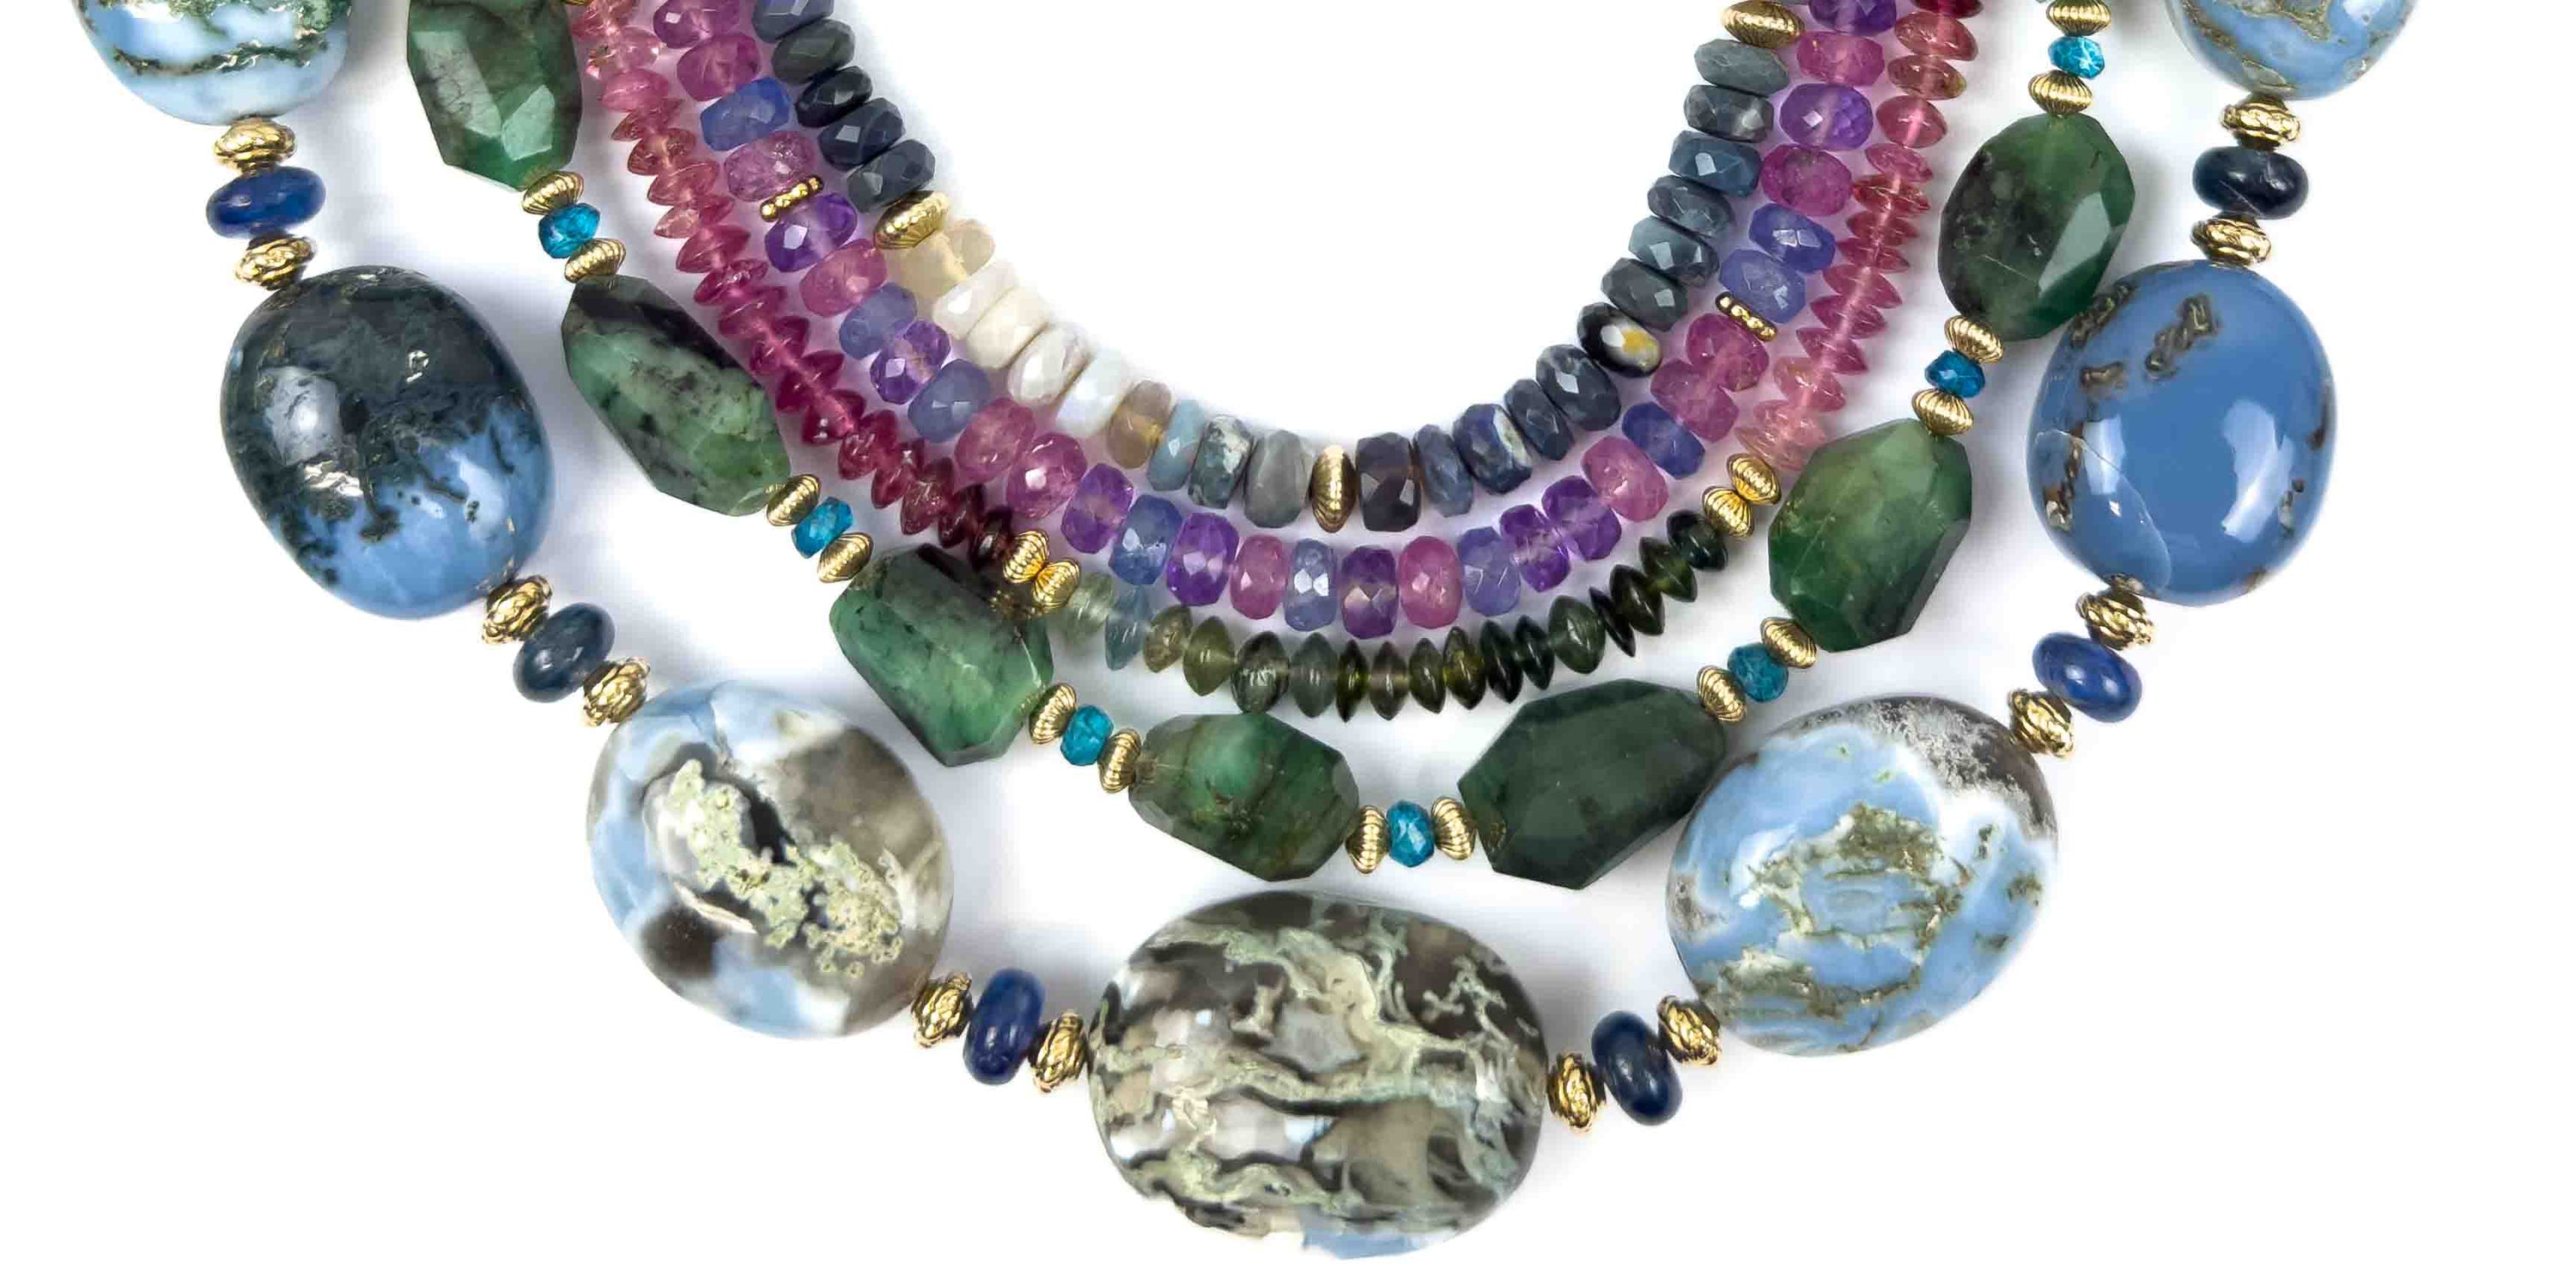 Miller Delicate Necklace: Women's Designer Necklaces